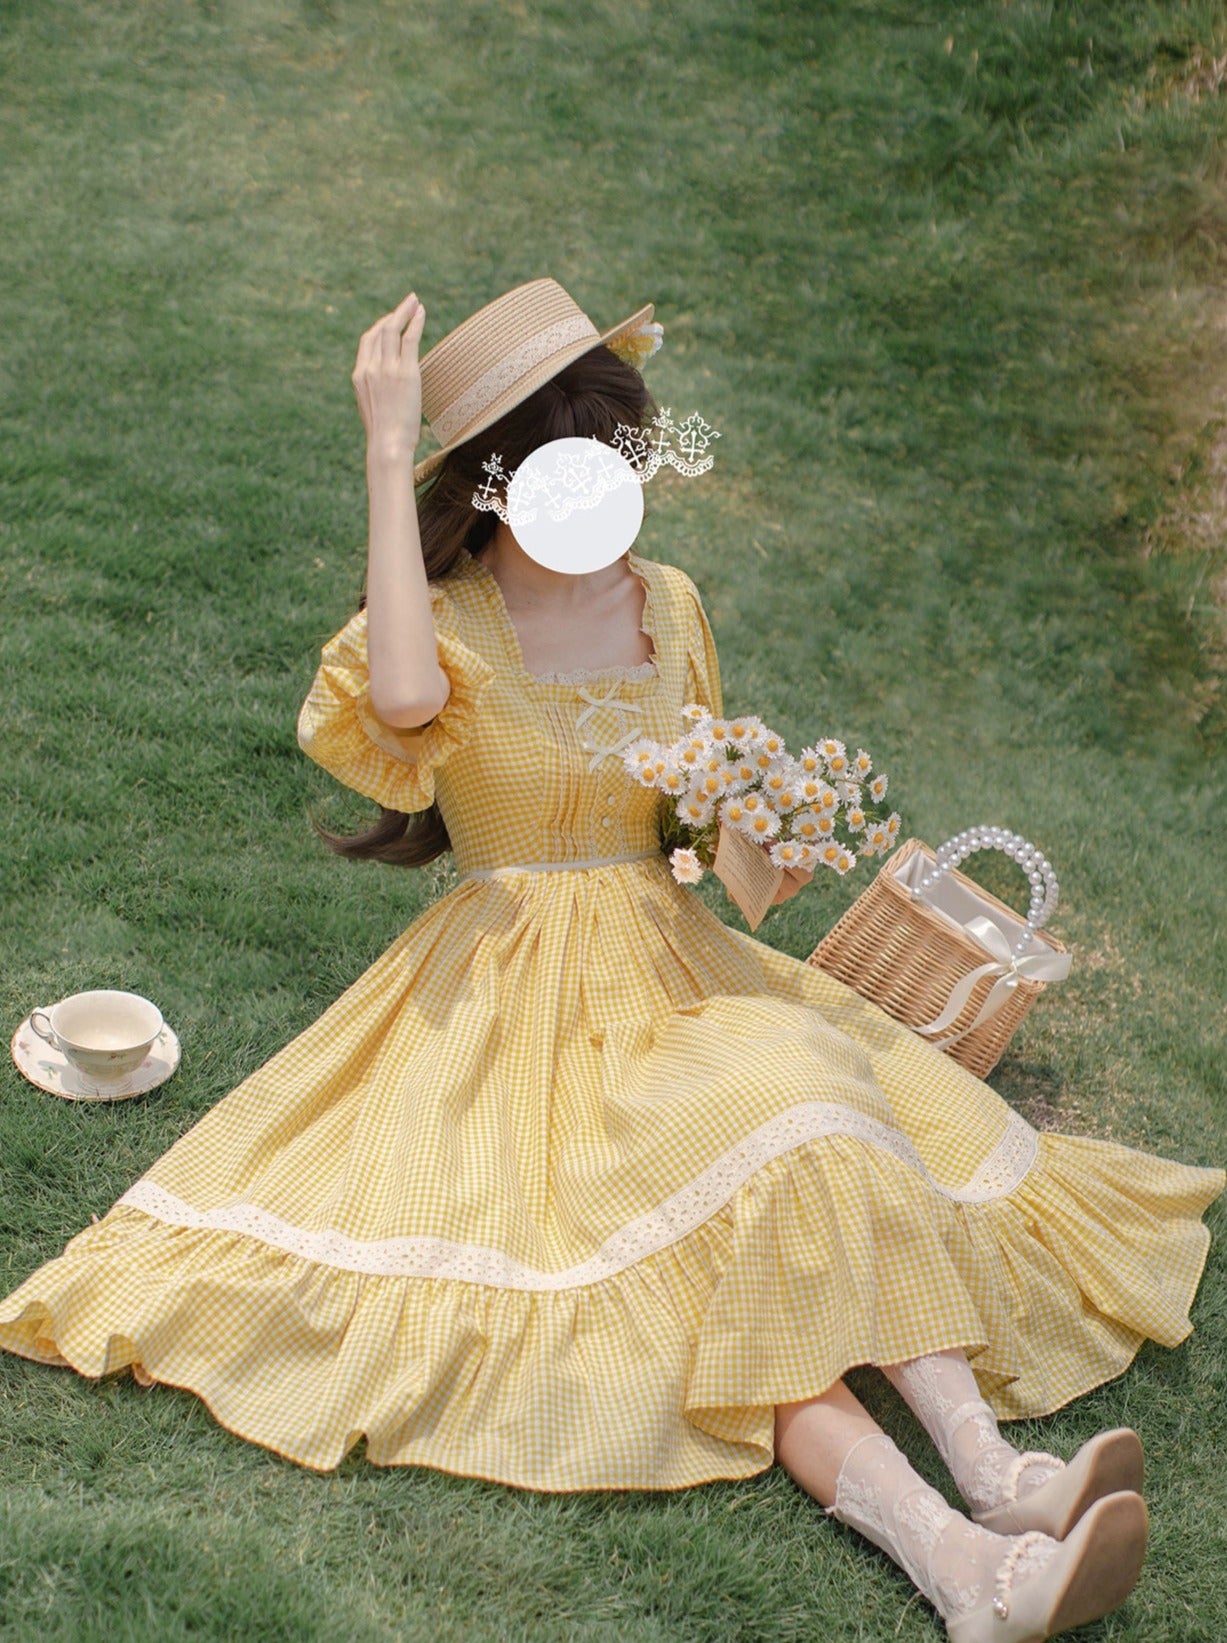 [Reservations] Retro Girly Yellow Dress + Apron + Ribbon